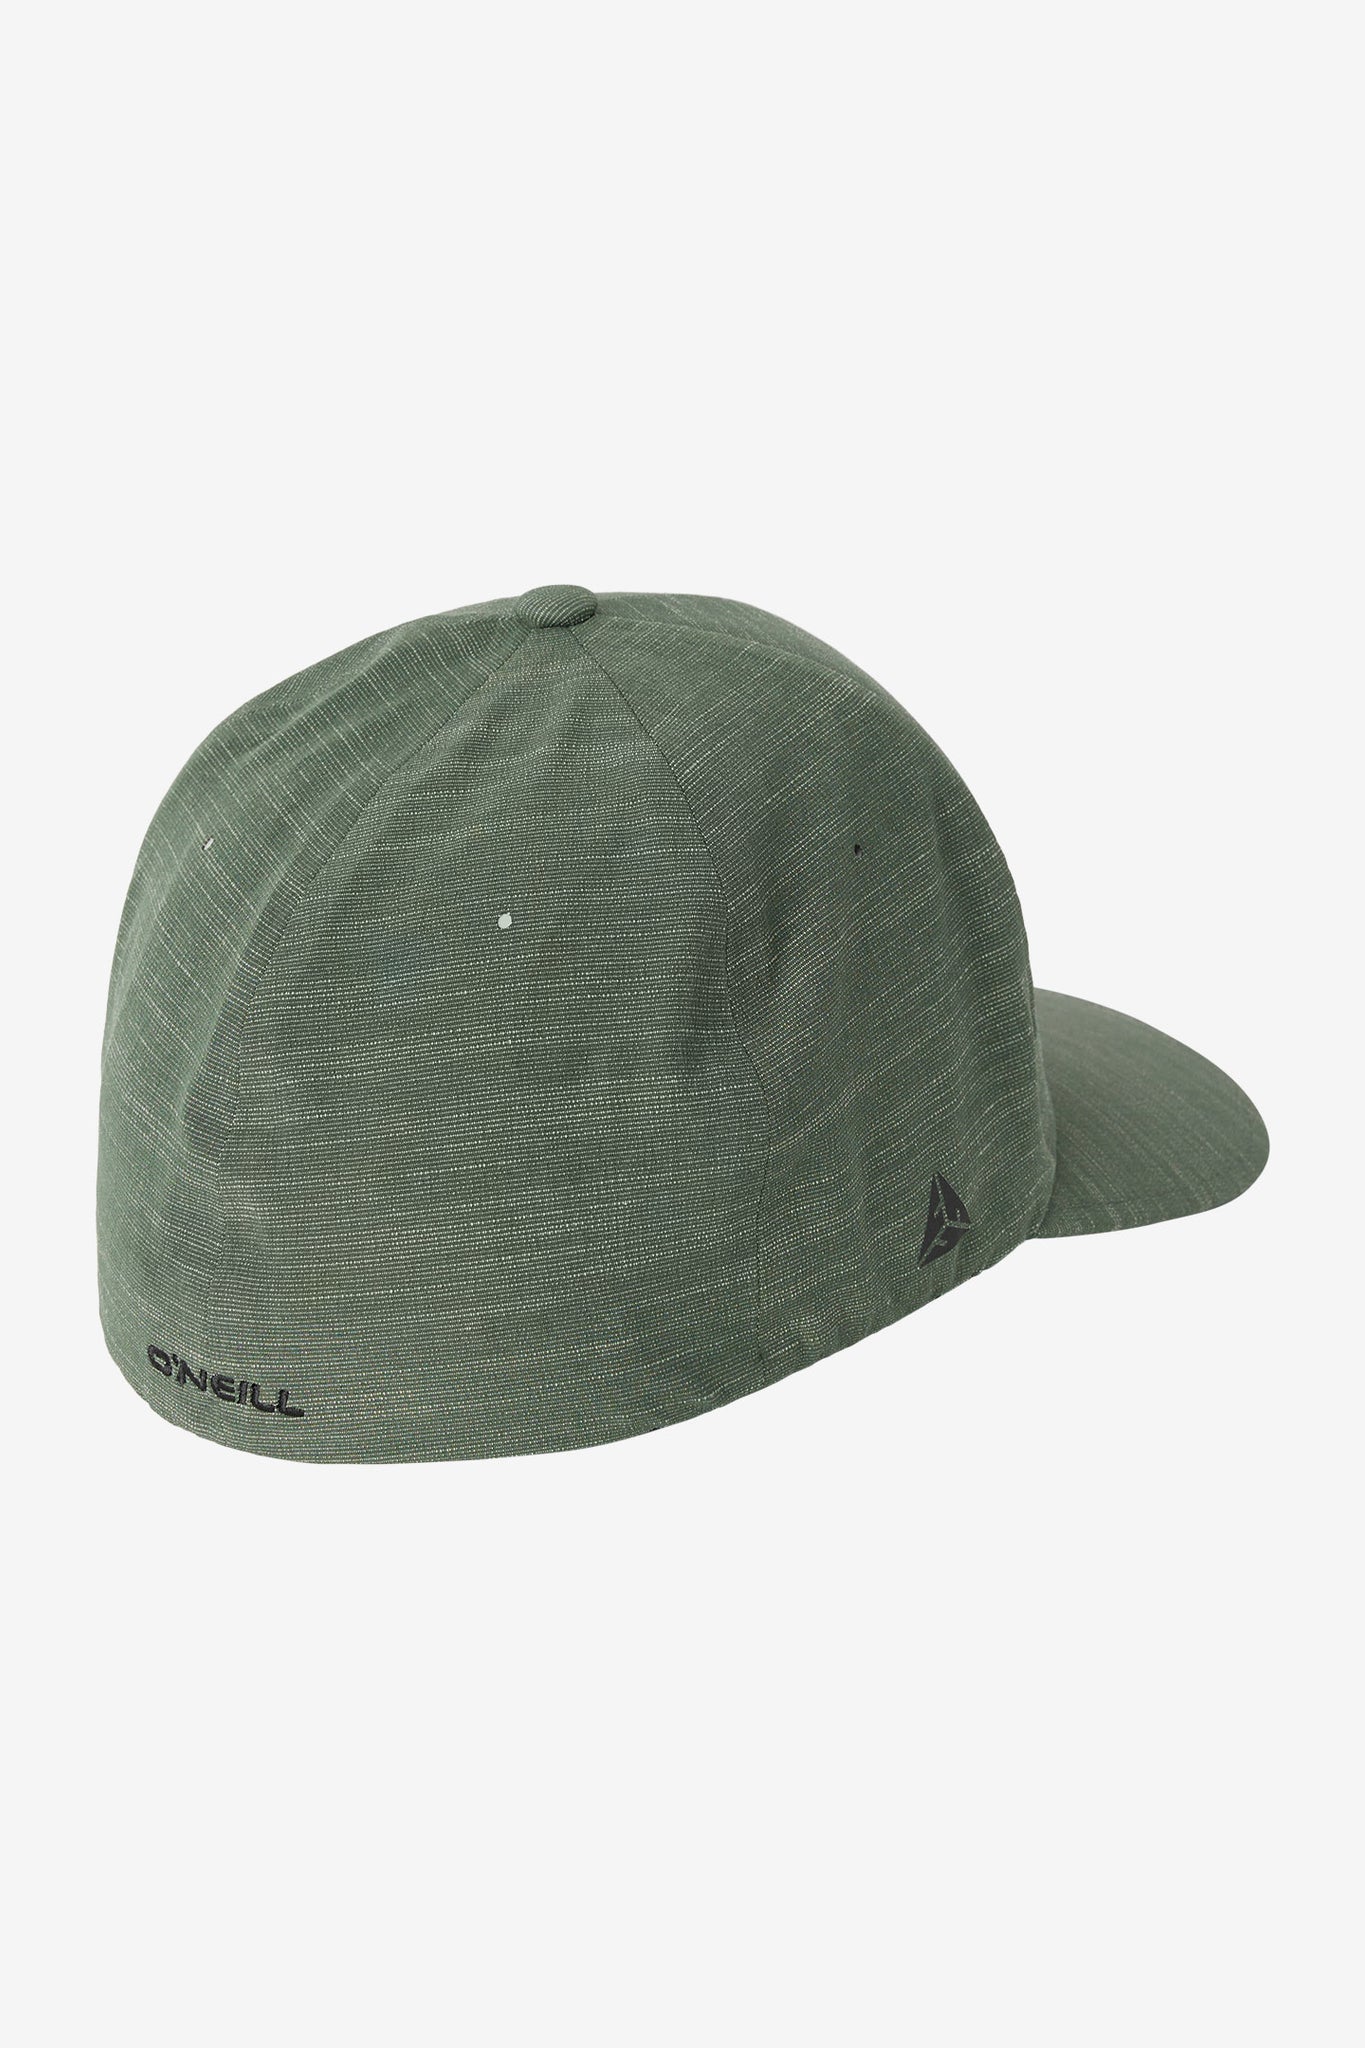 O'Neill Men's Hybrid Stretch Baseball Hat in Drk Olive2, Size Large/XL, Elastane/Polyester